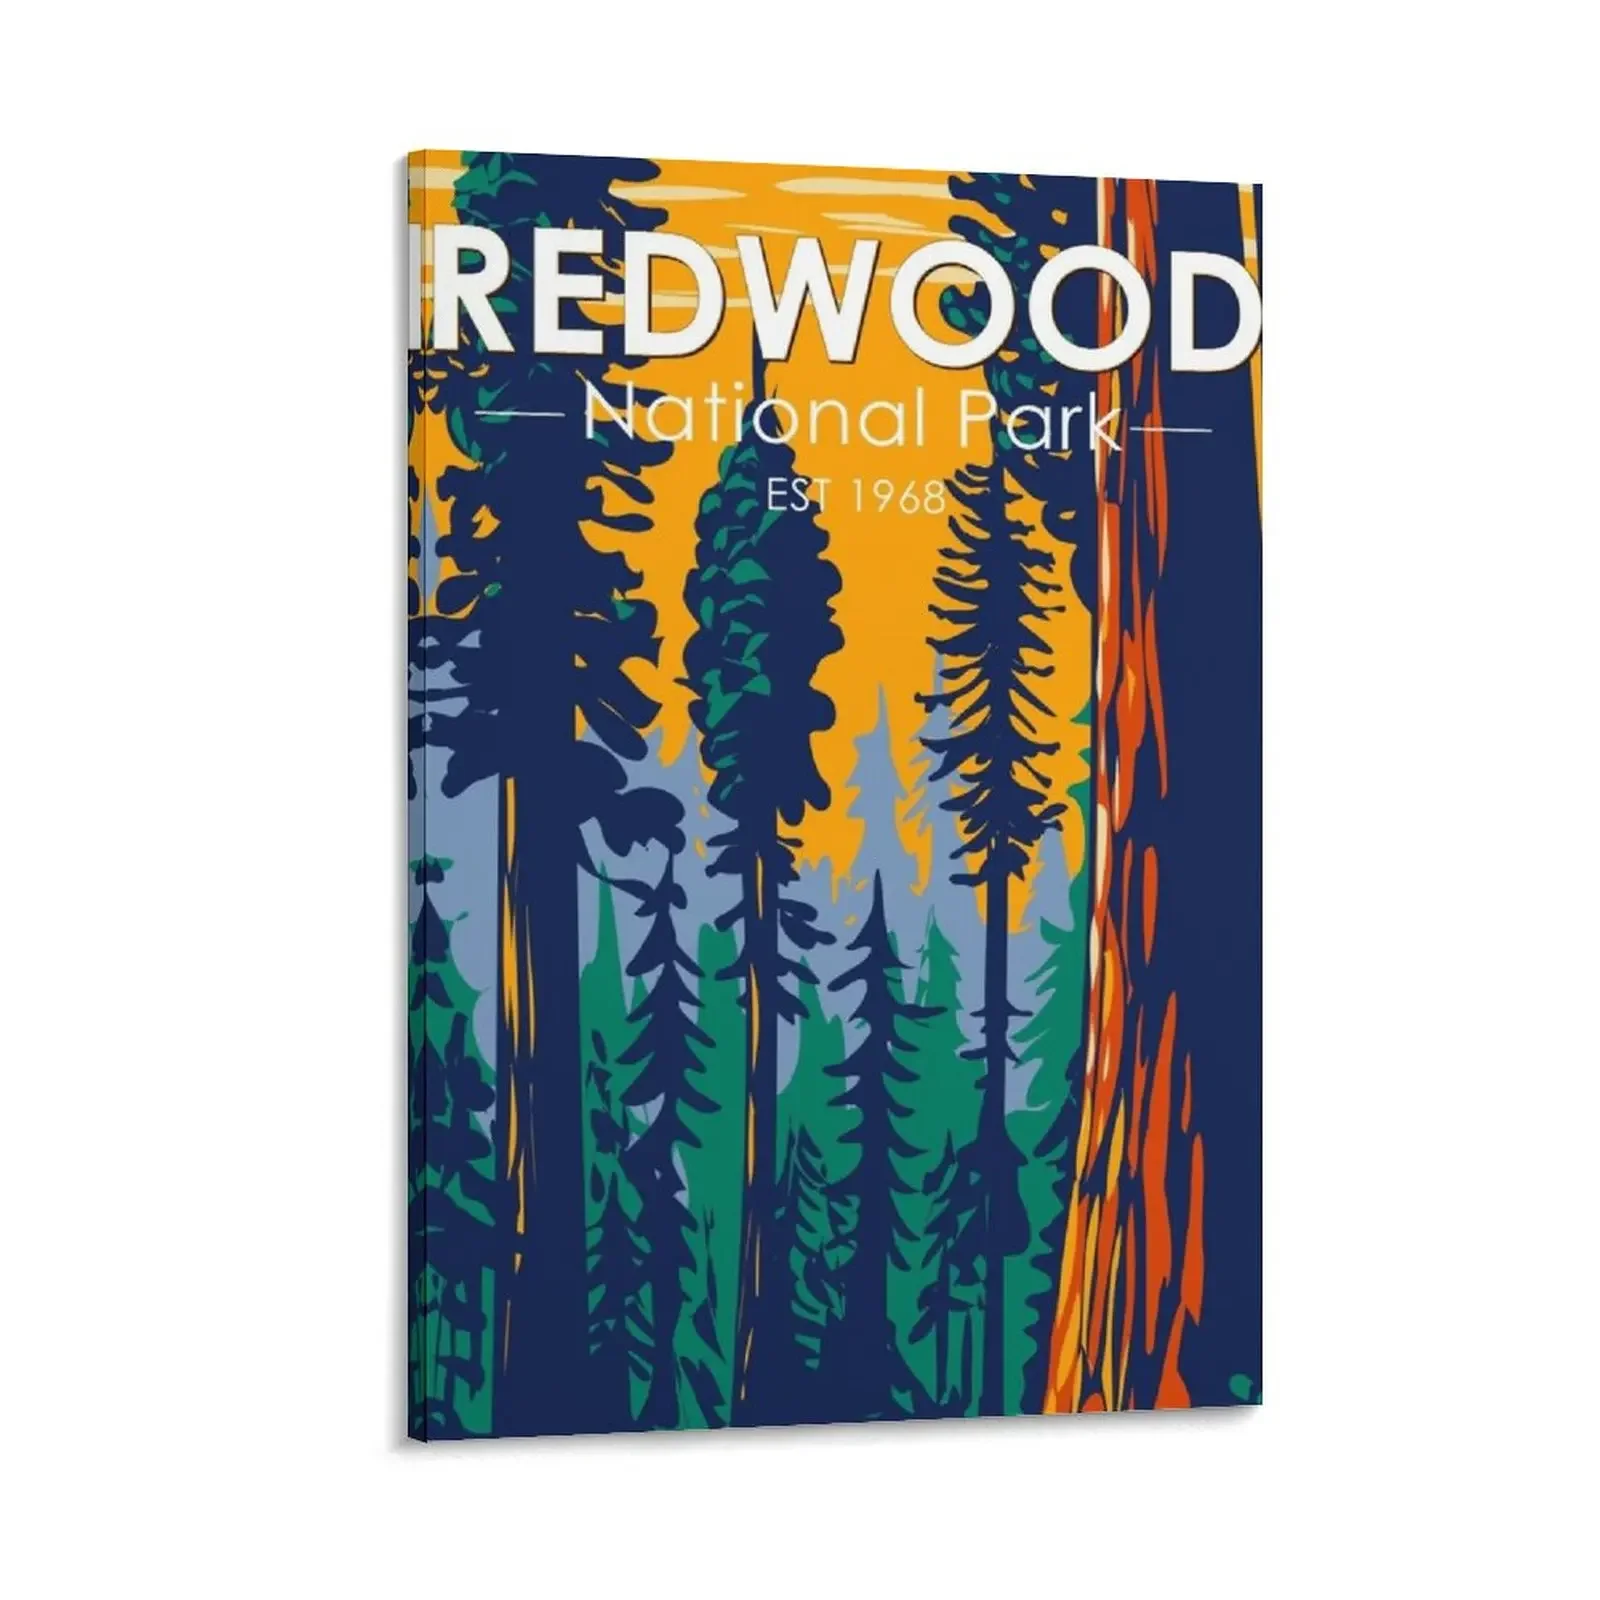 

Redwood National Park California Vintage Картина на холсте, украшение стена в эстетическом стиле